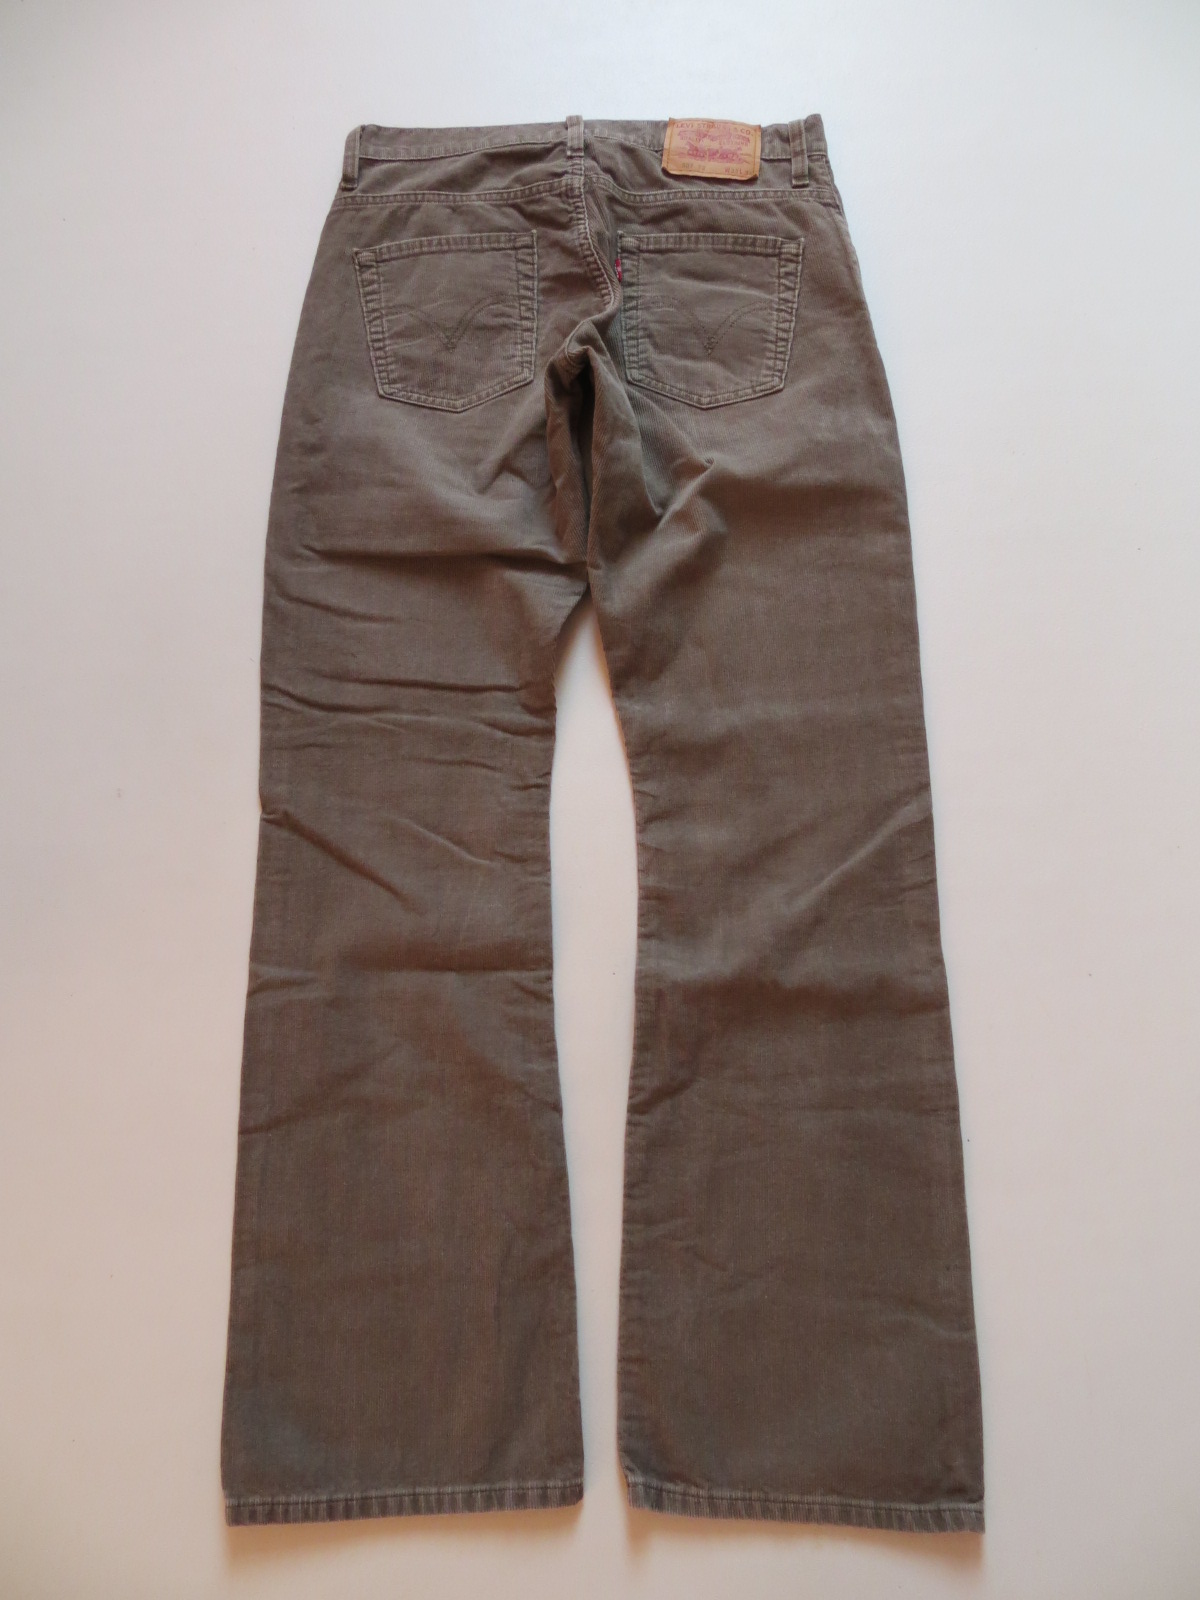 Levi's 507 Bootcut Cord Jeans Hose, W 31 /L 34, braun ! Vintage